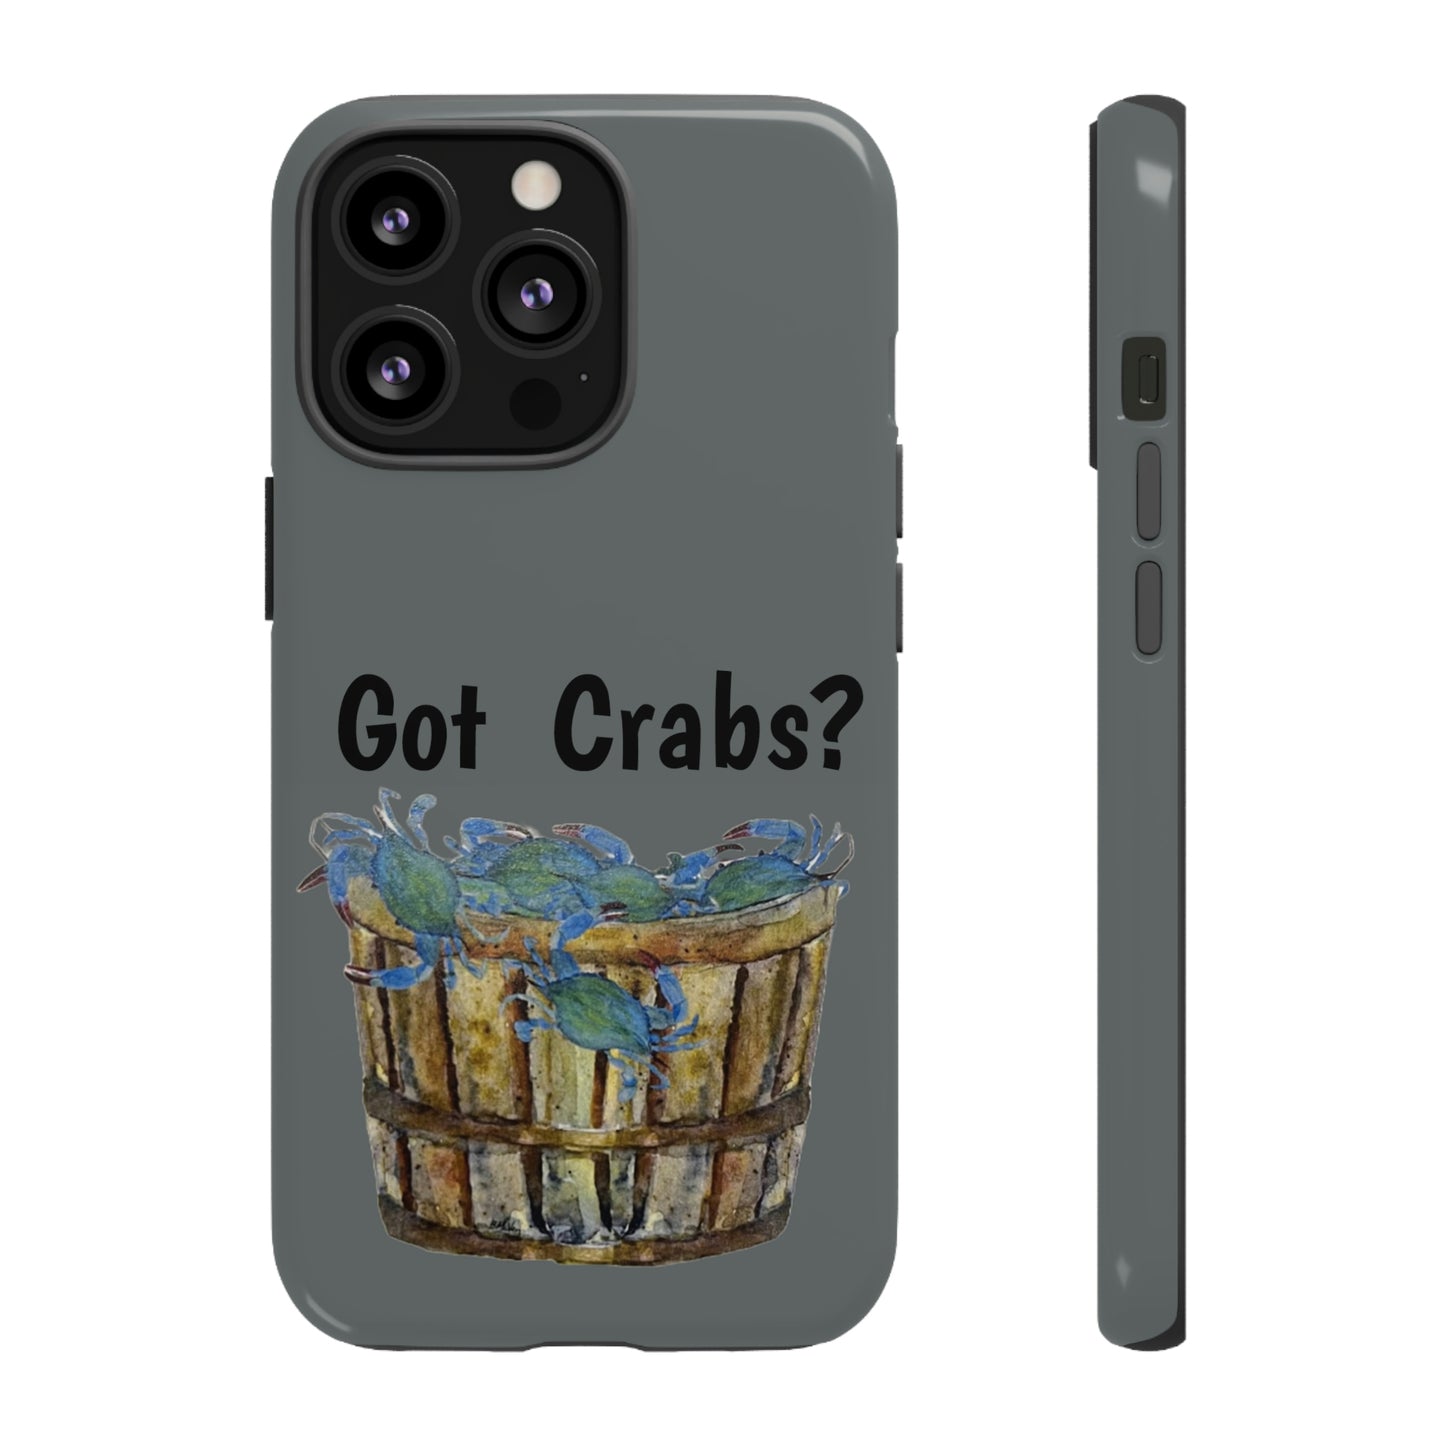 Got Crabs? Tough Cases